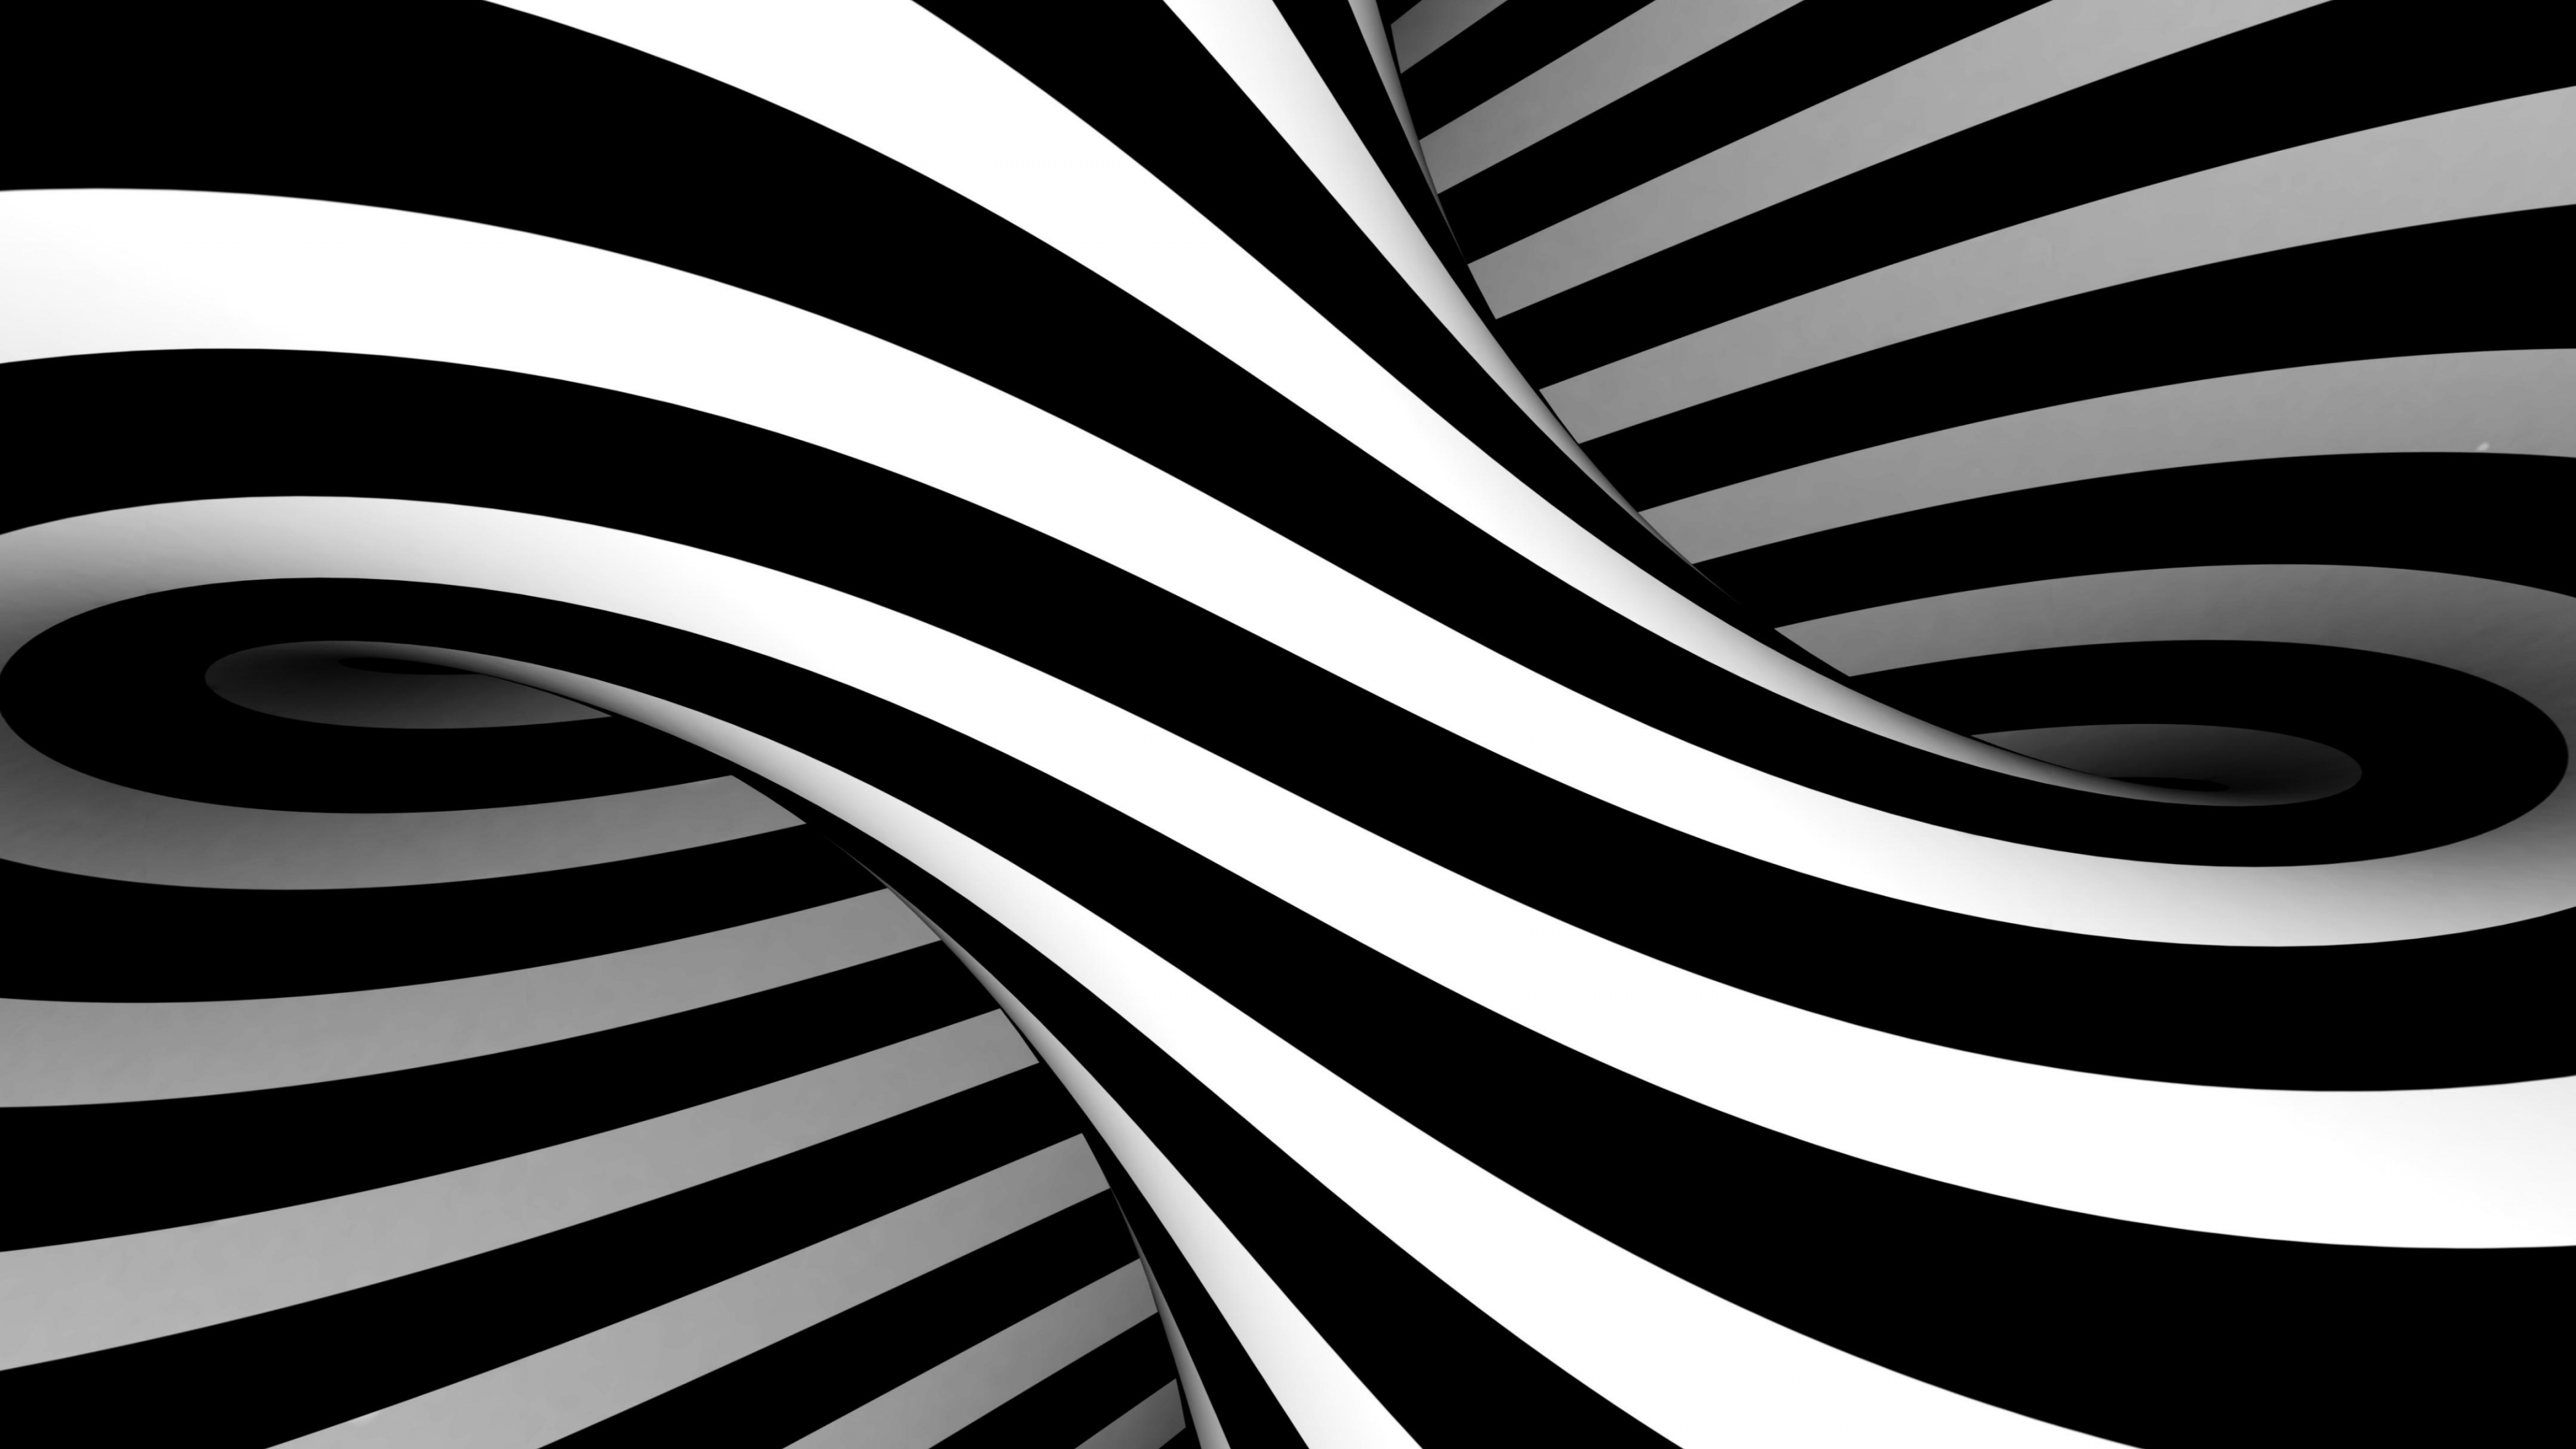 Download wallpaper 3840x2160 bw, black-white, stripes, optical illusion,  art 4k wallpaper, uhd wallpaper, 16:9 widescreen 3840x2160 hd background,  19991